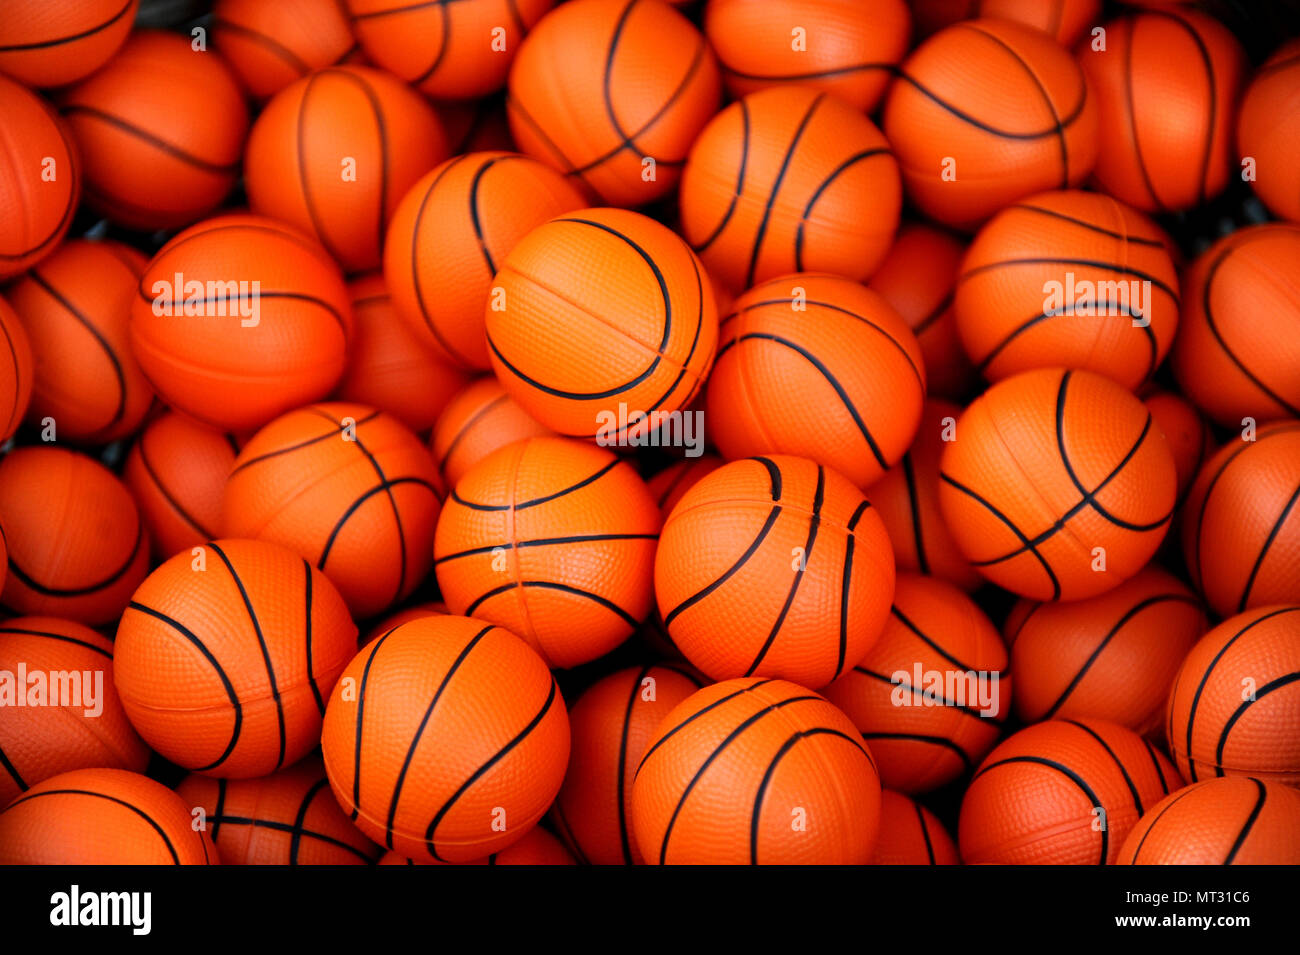 Seamless Vector Pattern with Basketball Balls Stock Illustration   Illustration of pattern decoration 120552581